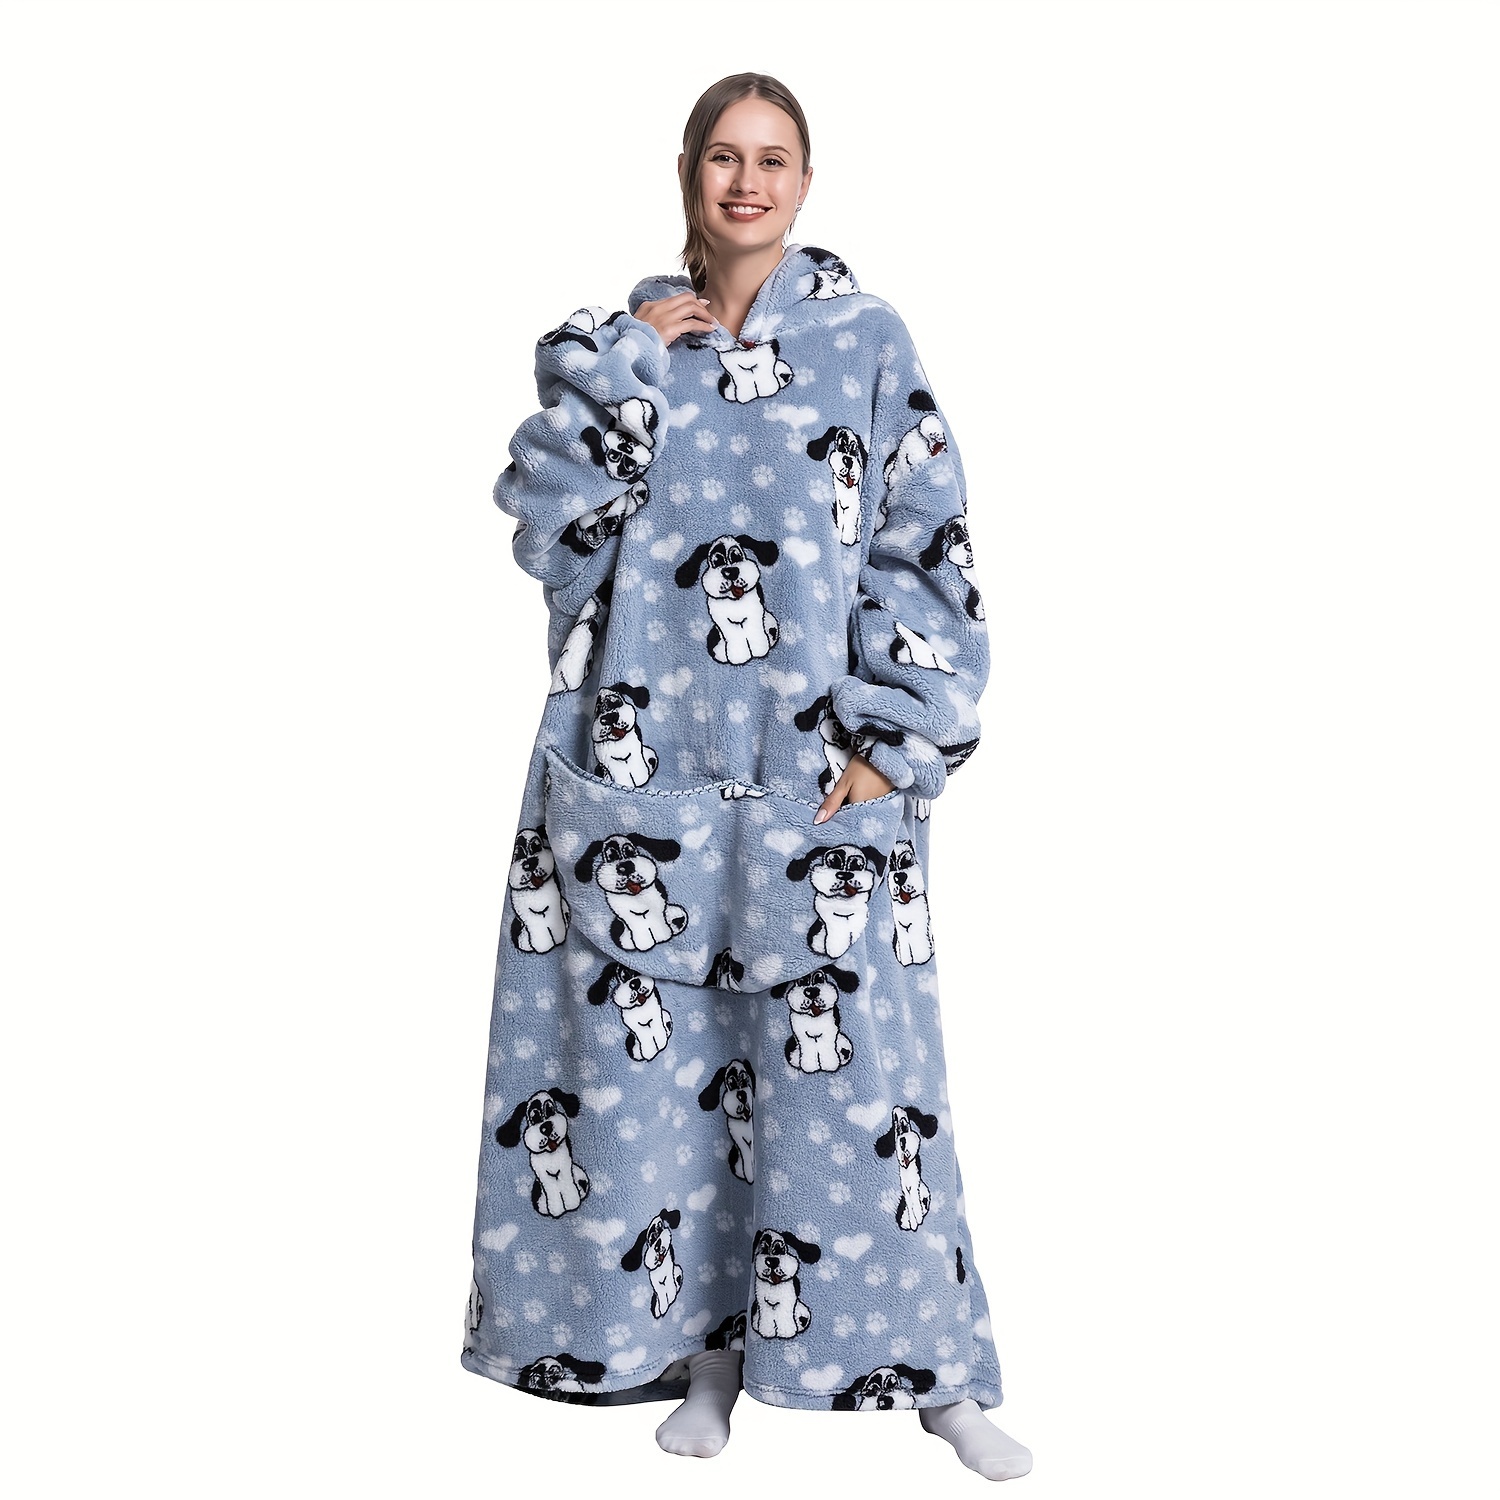  Bedsure Wearable Blanket Hoodie For Kid - Sherpa Fleece  Hooded Blanket For Teens As A Gift, Warm & Cozy Blanket Sweatshirt